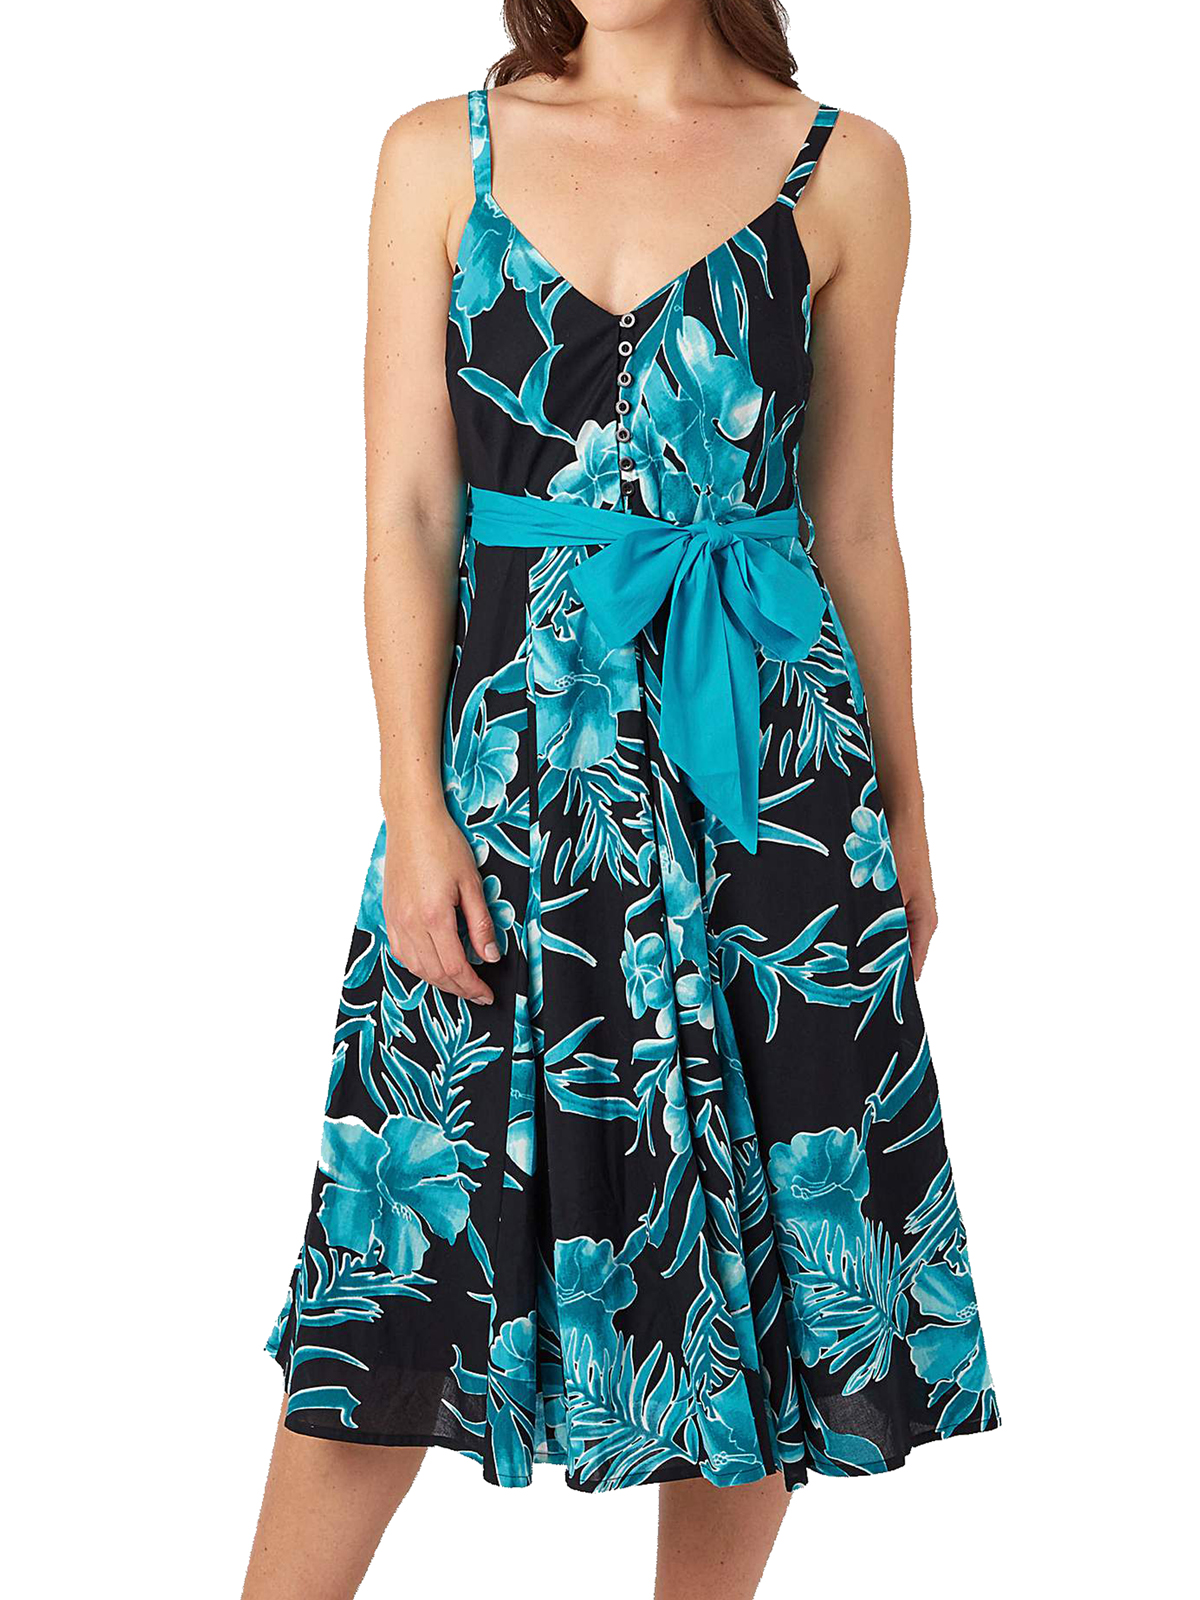 Joe Browns - - BLACK Teal Print Garden Party 50's Style Dress - Plus ...